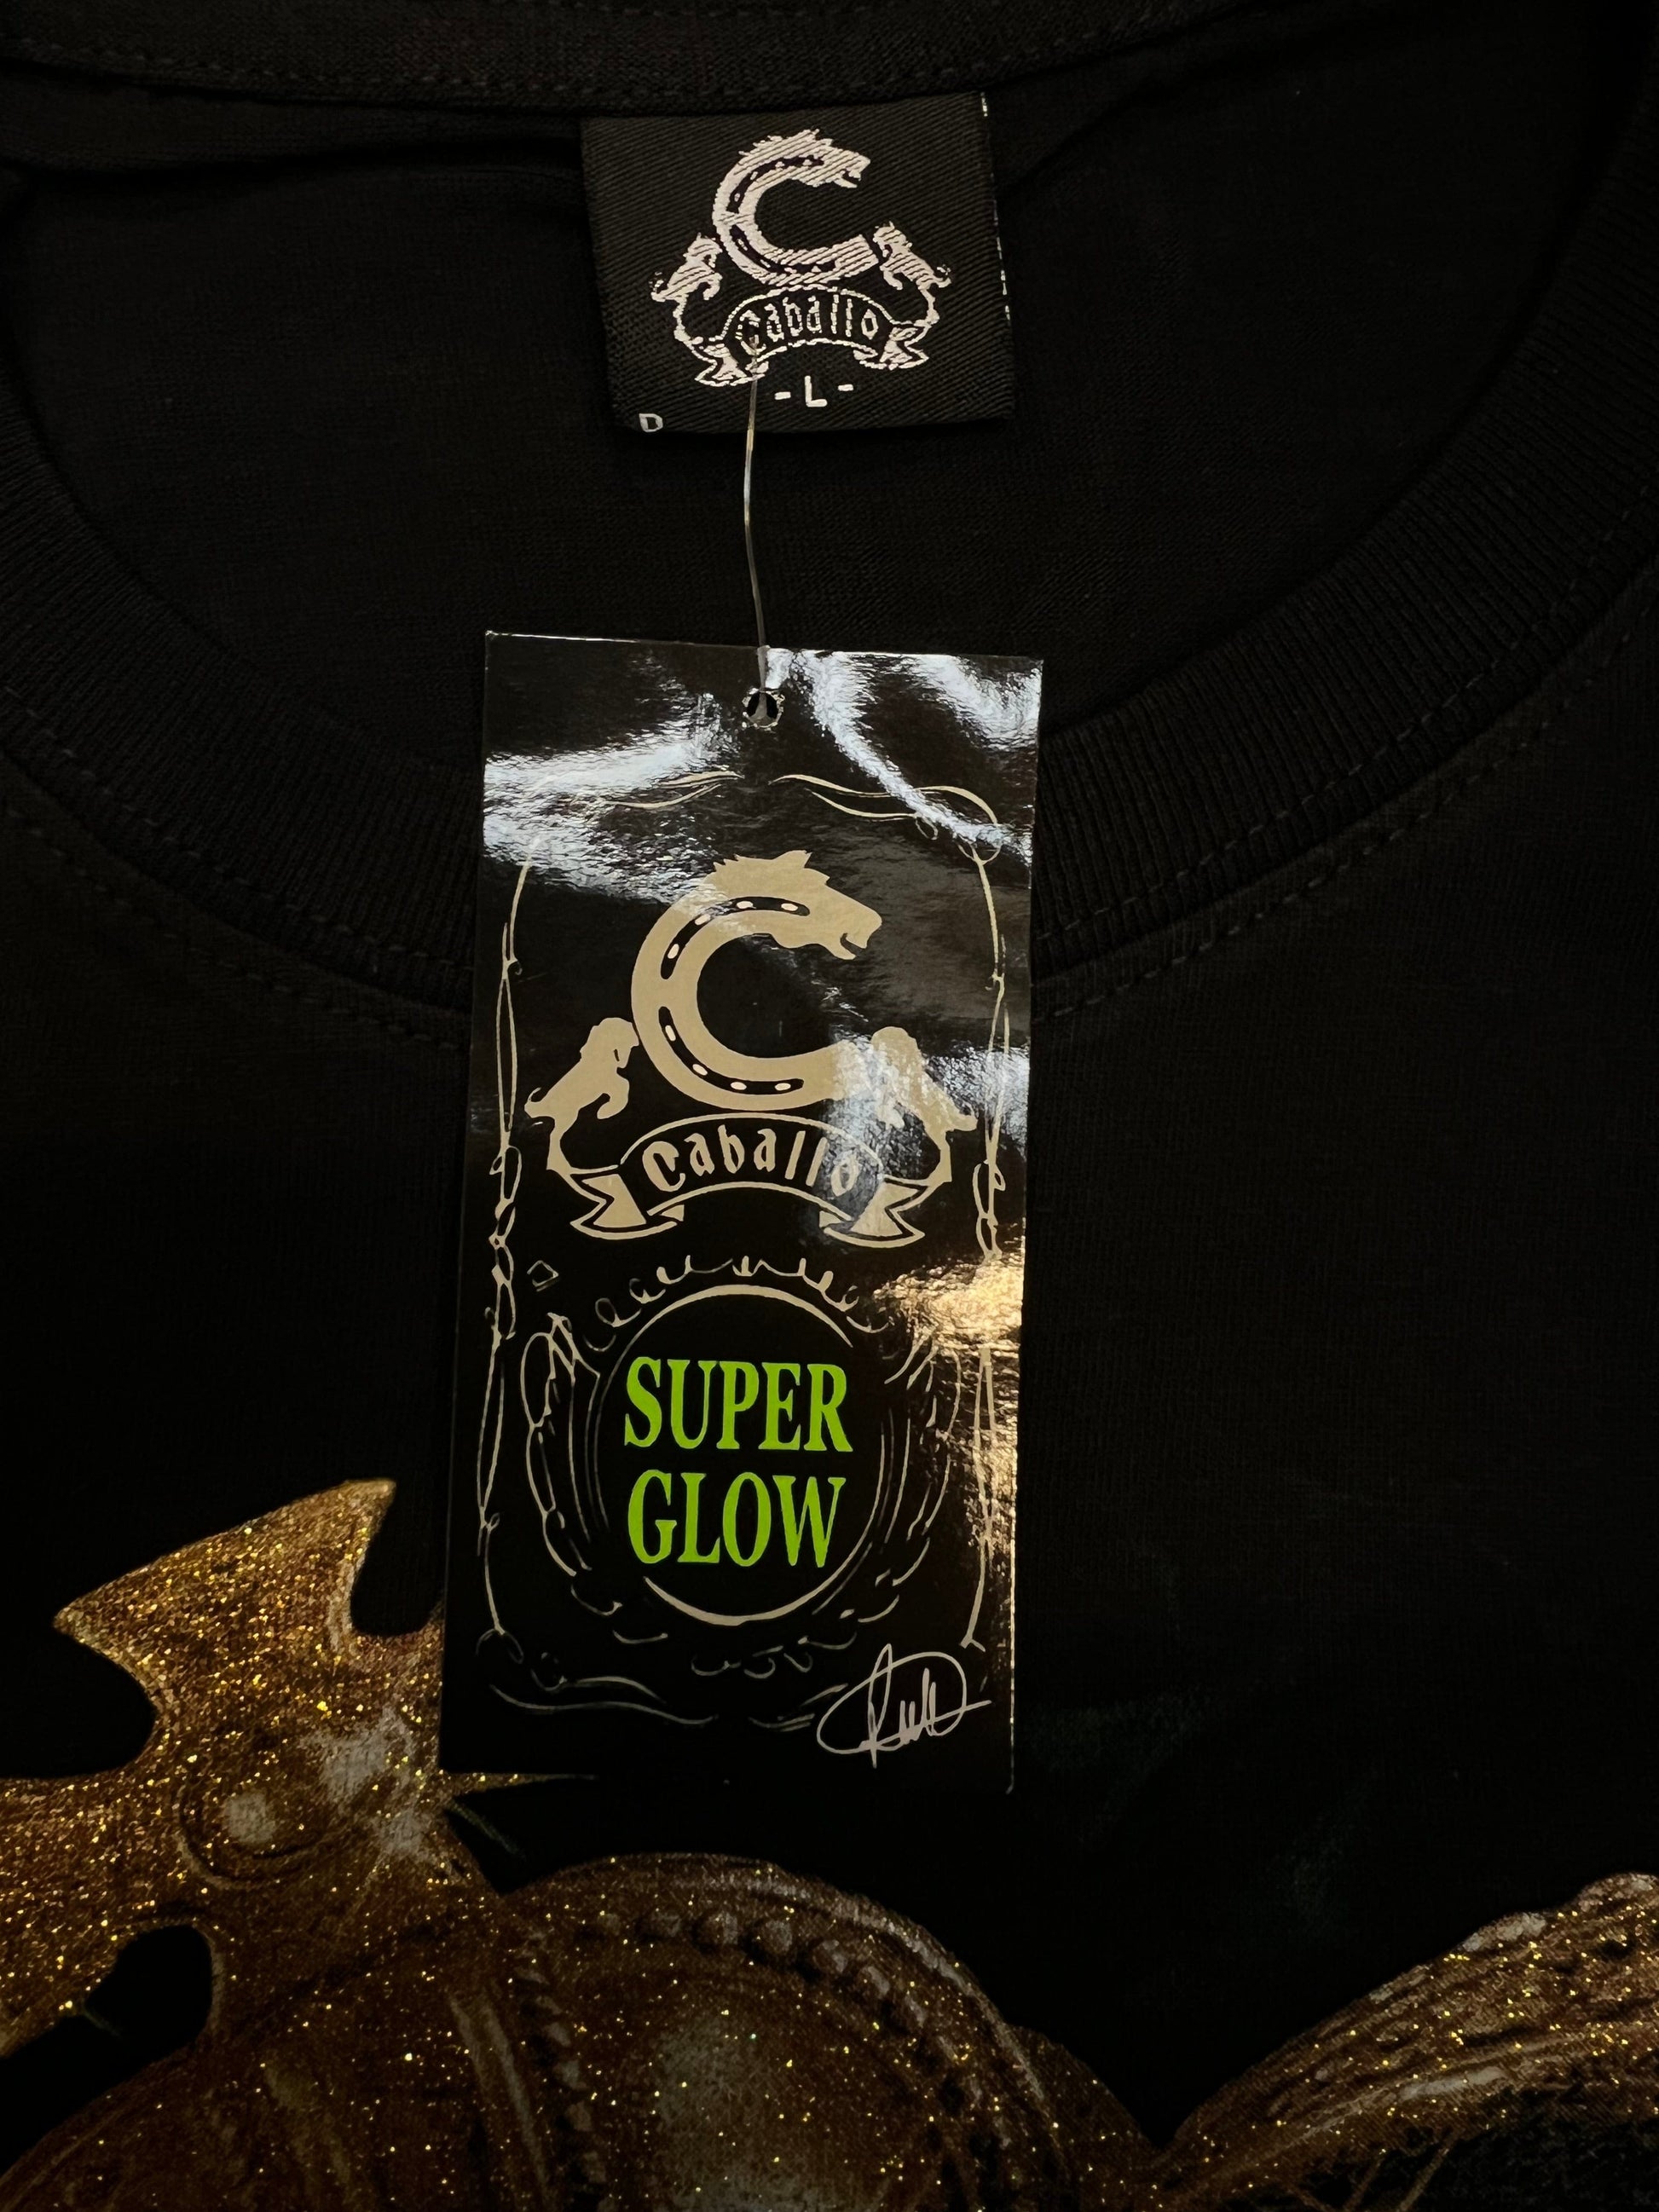 Glow in the Dark Black King Skull Crown Roses T Shirt Size L